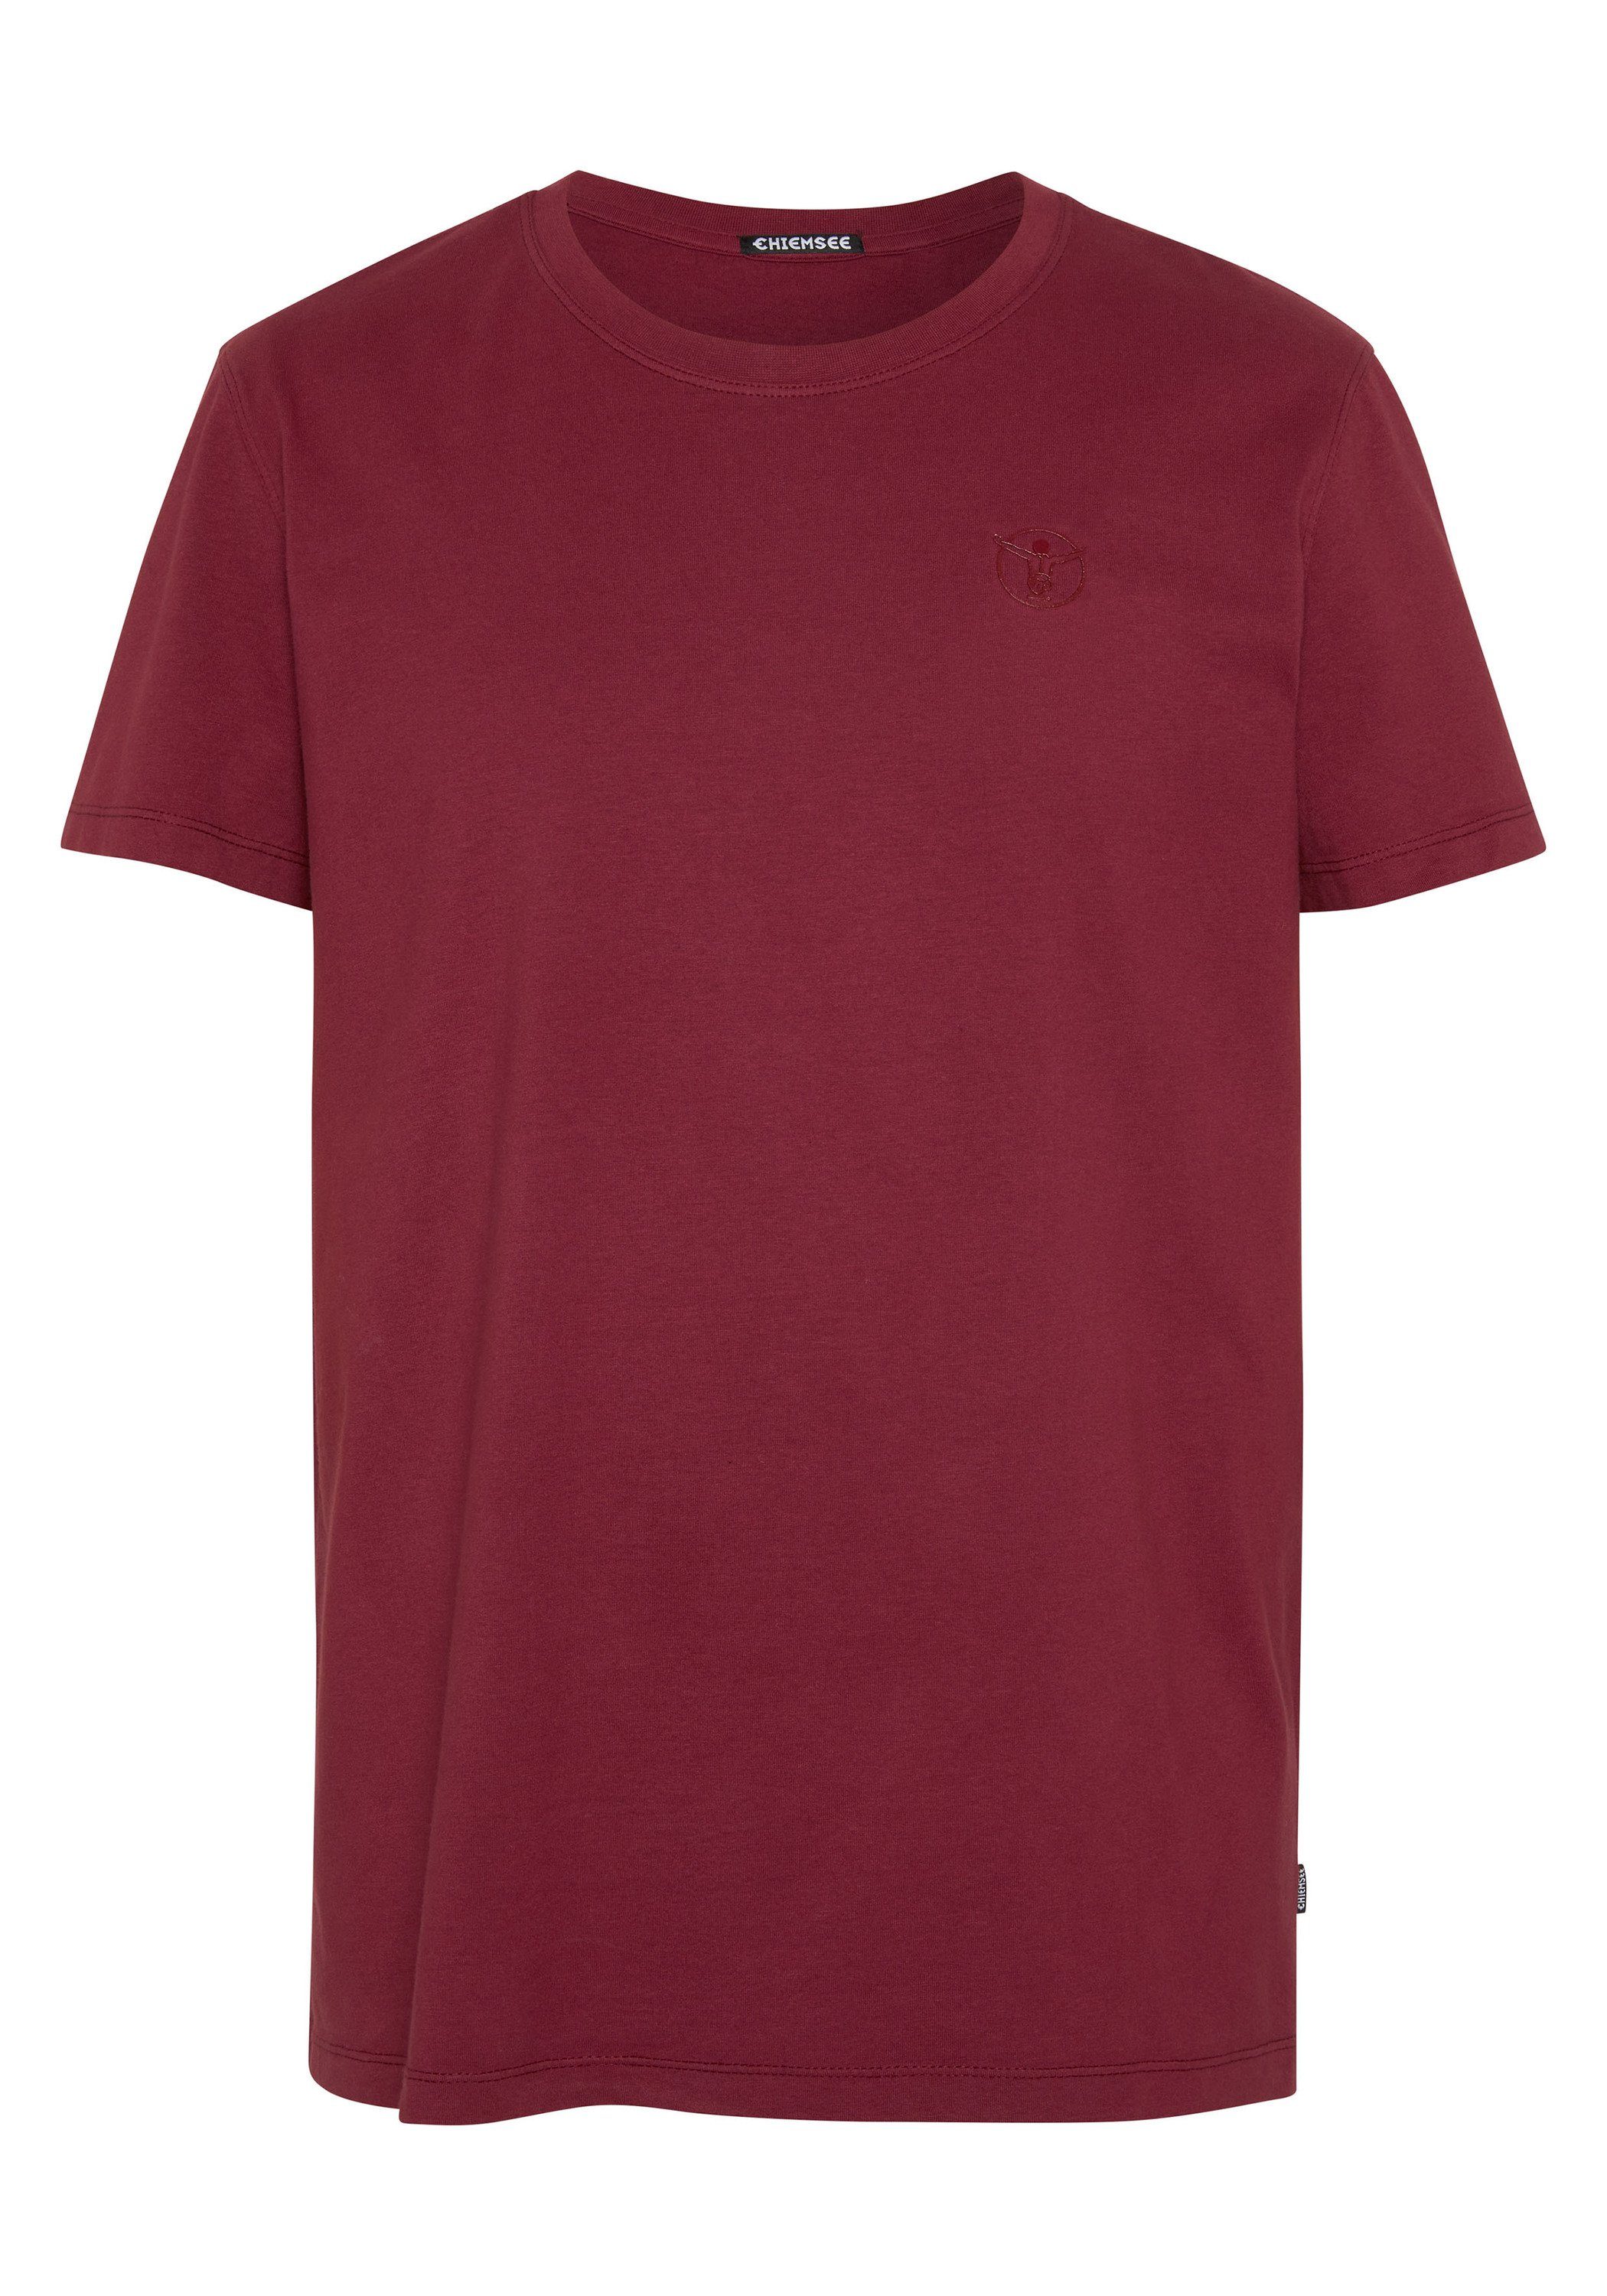 Chiemsee T-Shirt Print-Shirt 19-1934 aus 1 Baumwolle Tibetan Red